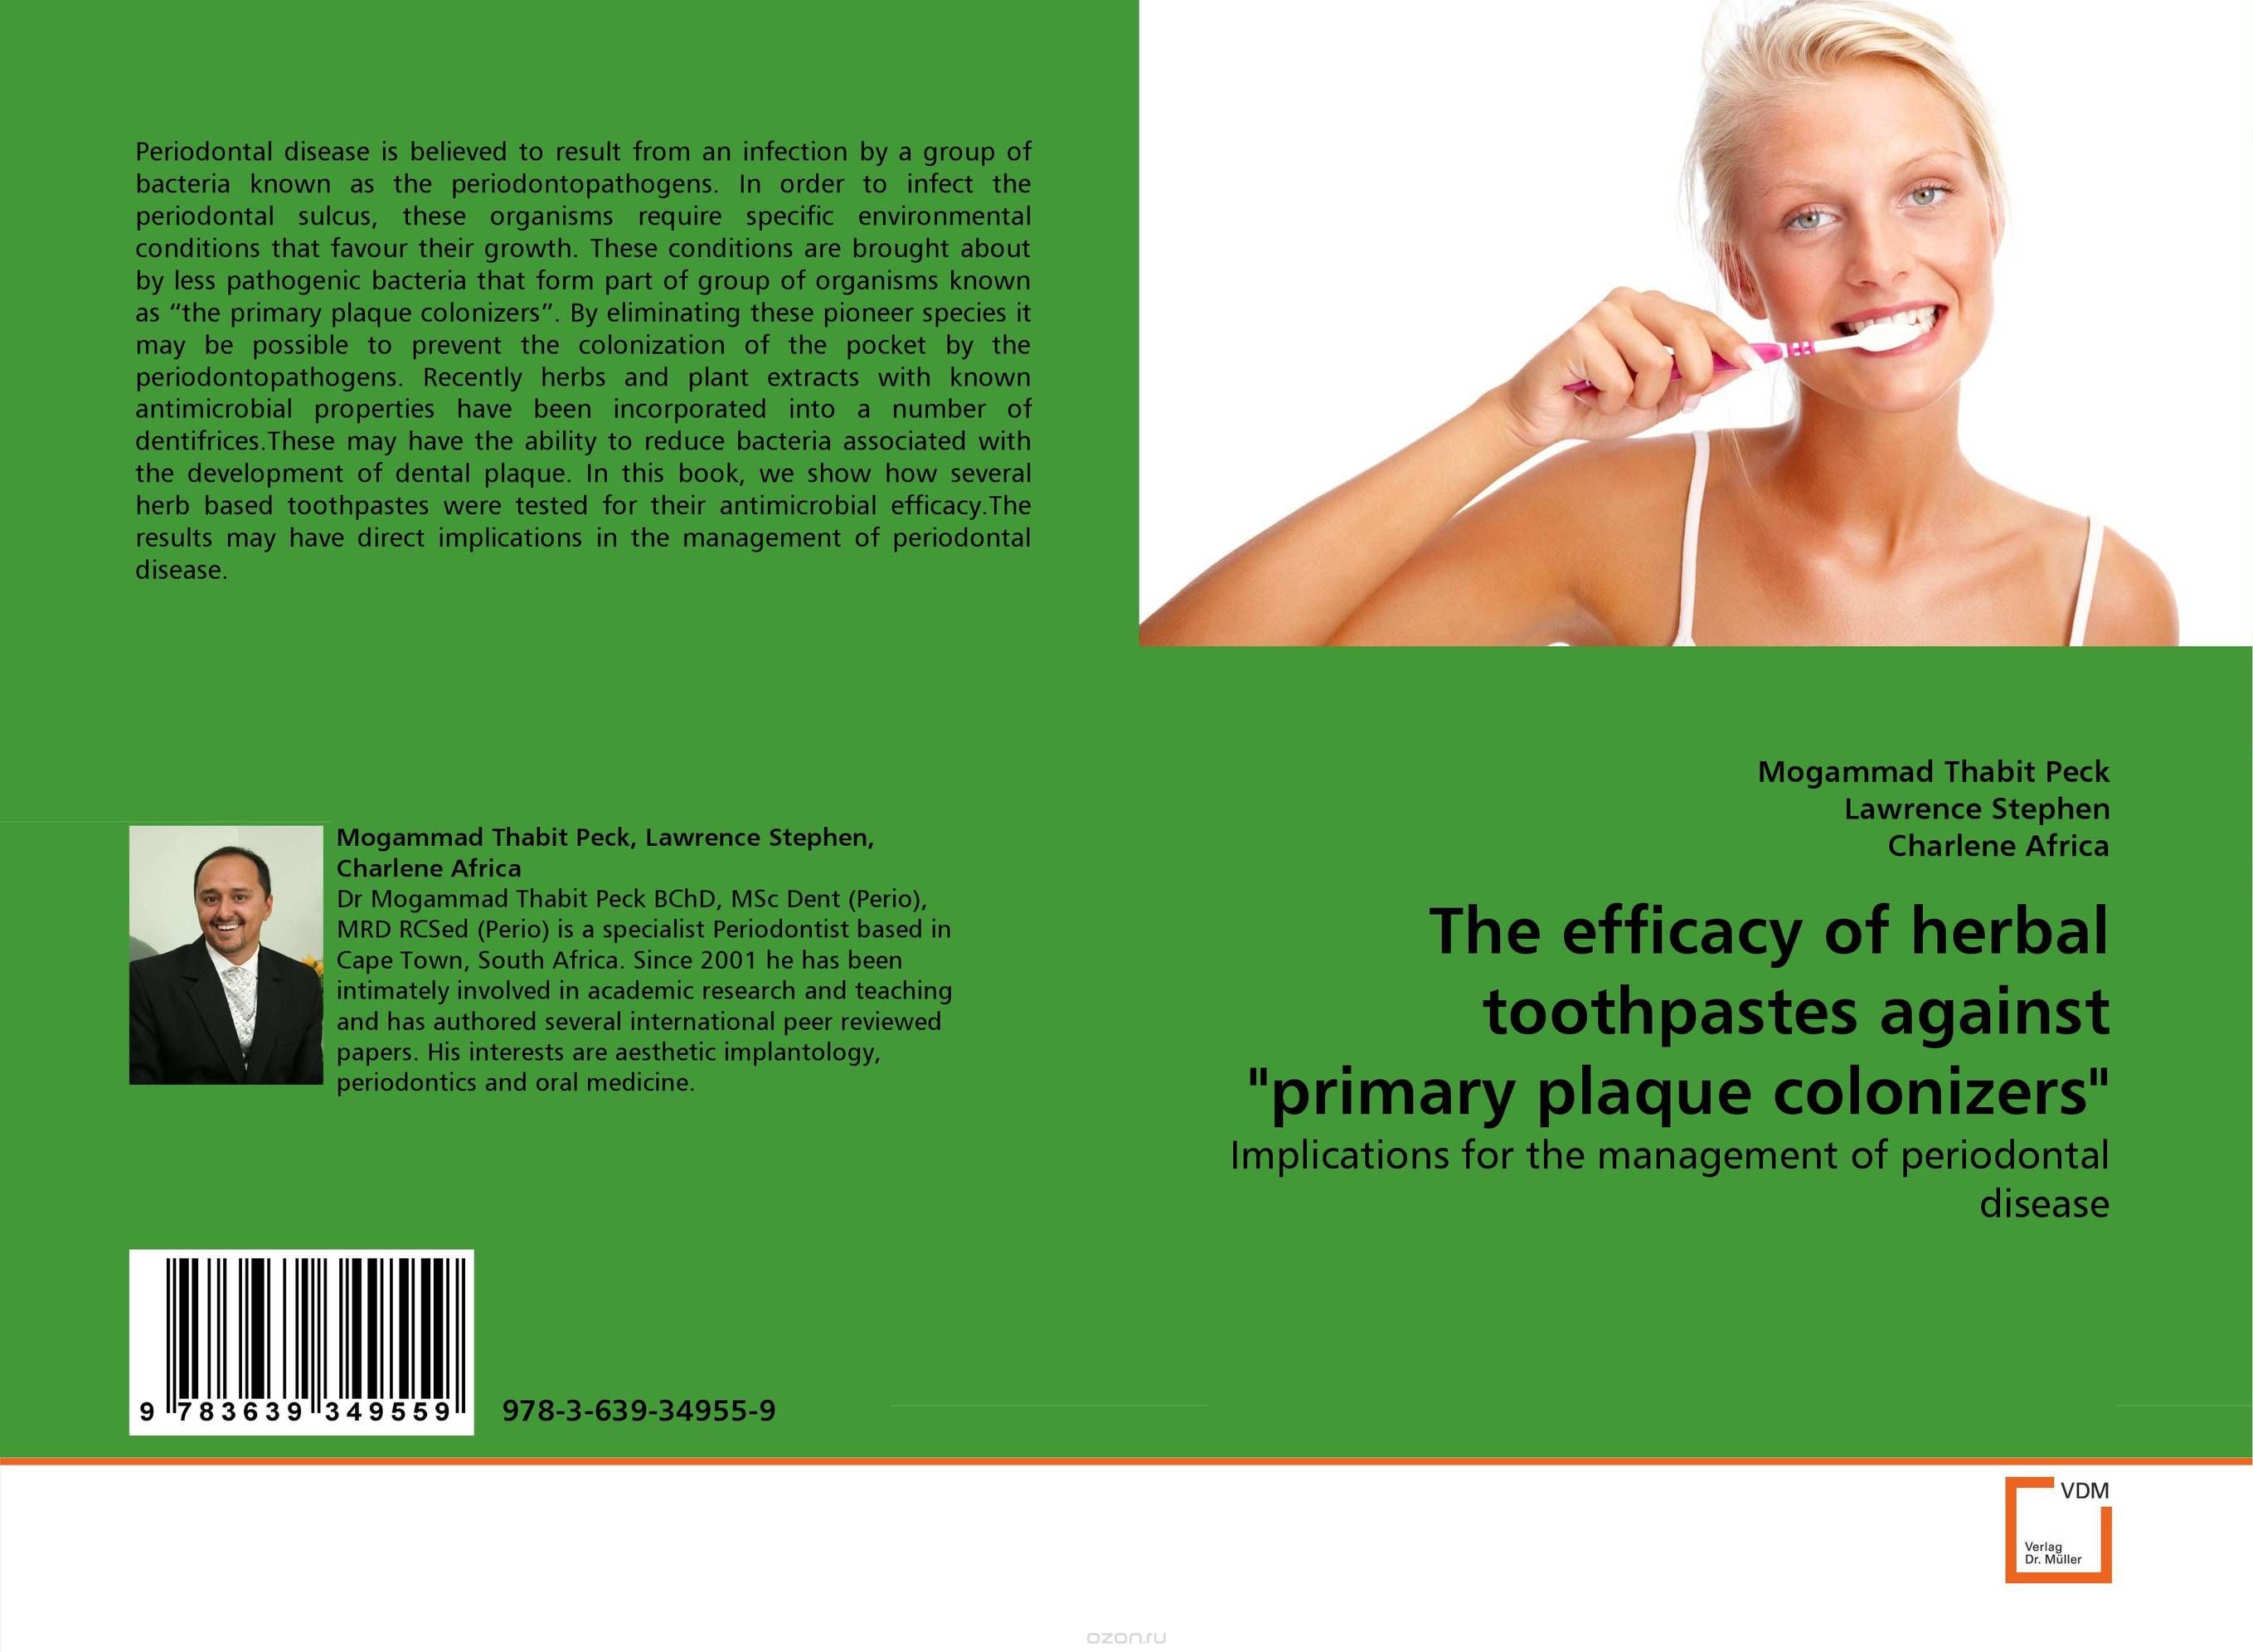 Скачать книгу "The efficacy of herbal toothpastes against "primary plaque colonizers""